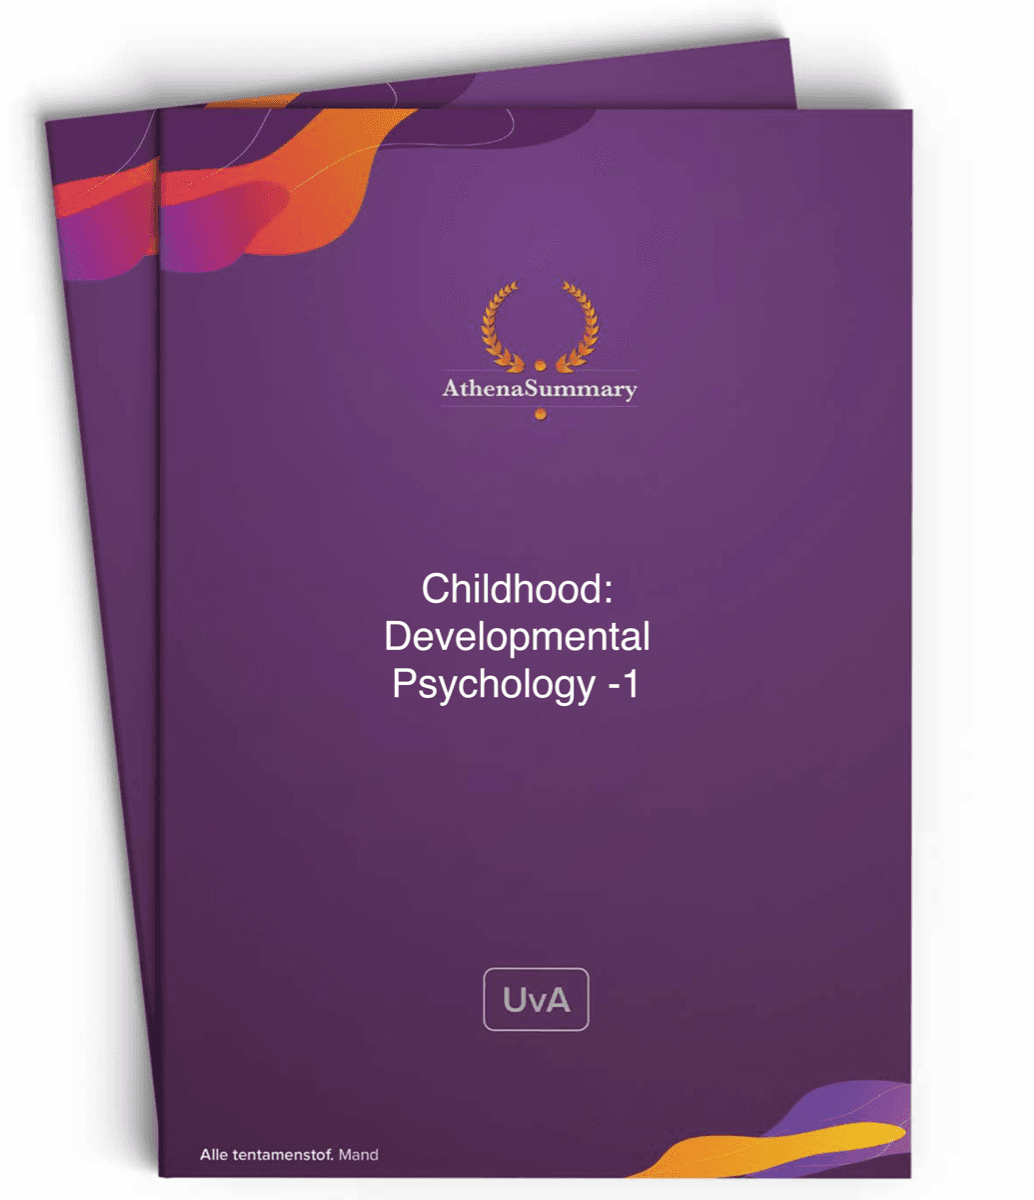 Literature Summary: Childhood: Developmental Psychology - 1